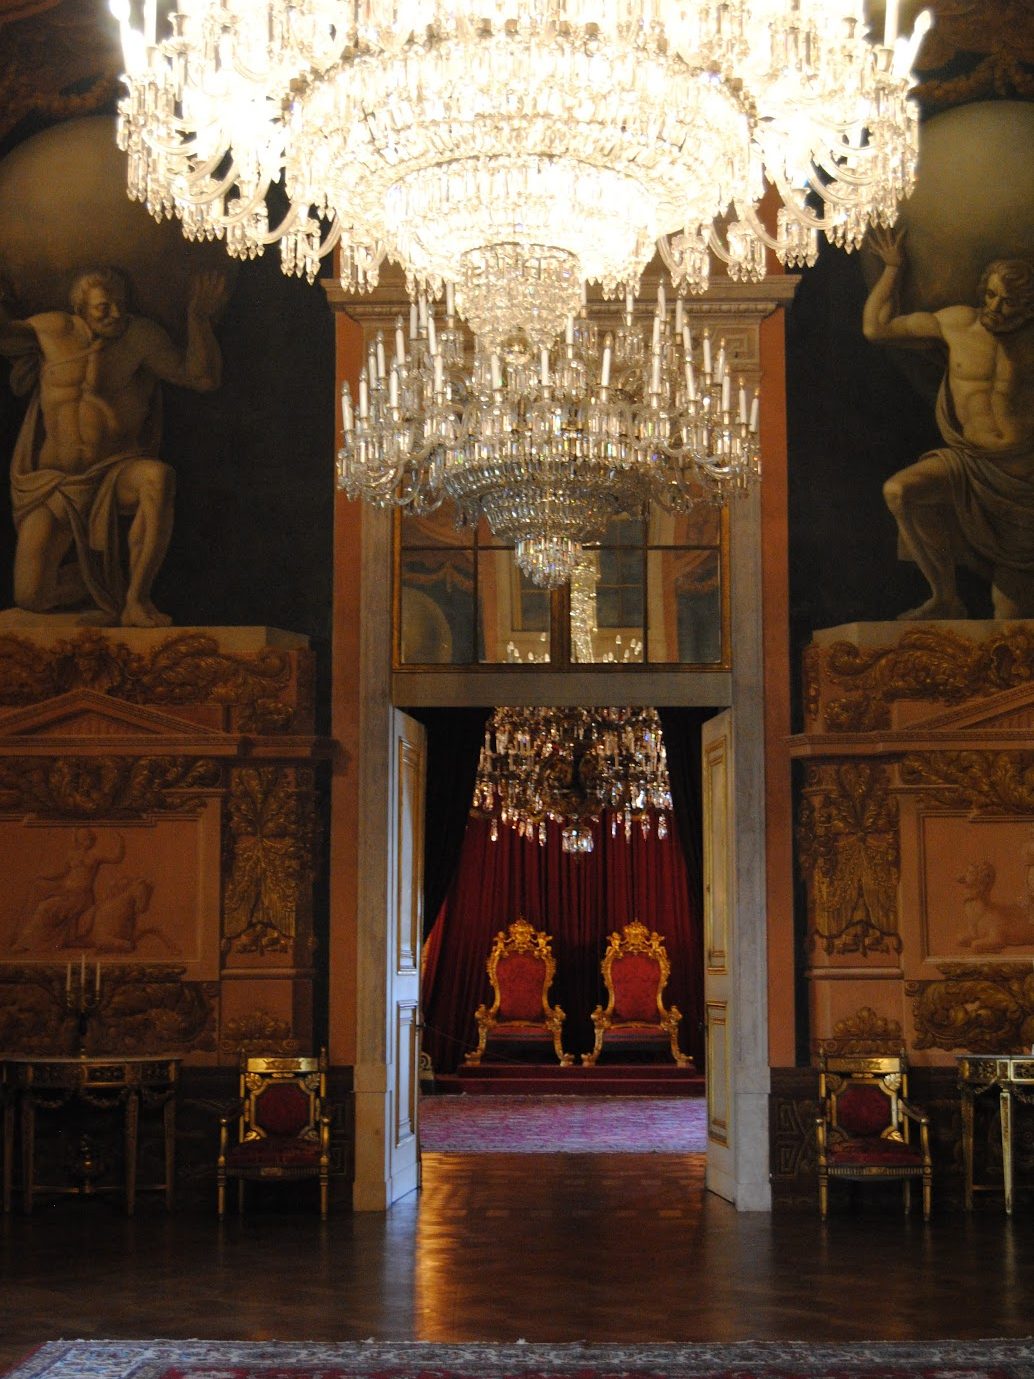 A royal throne room